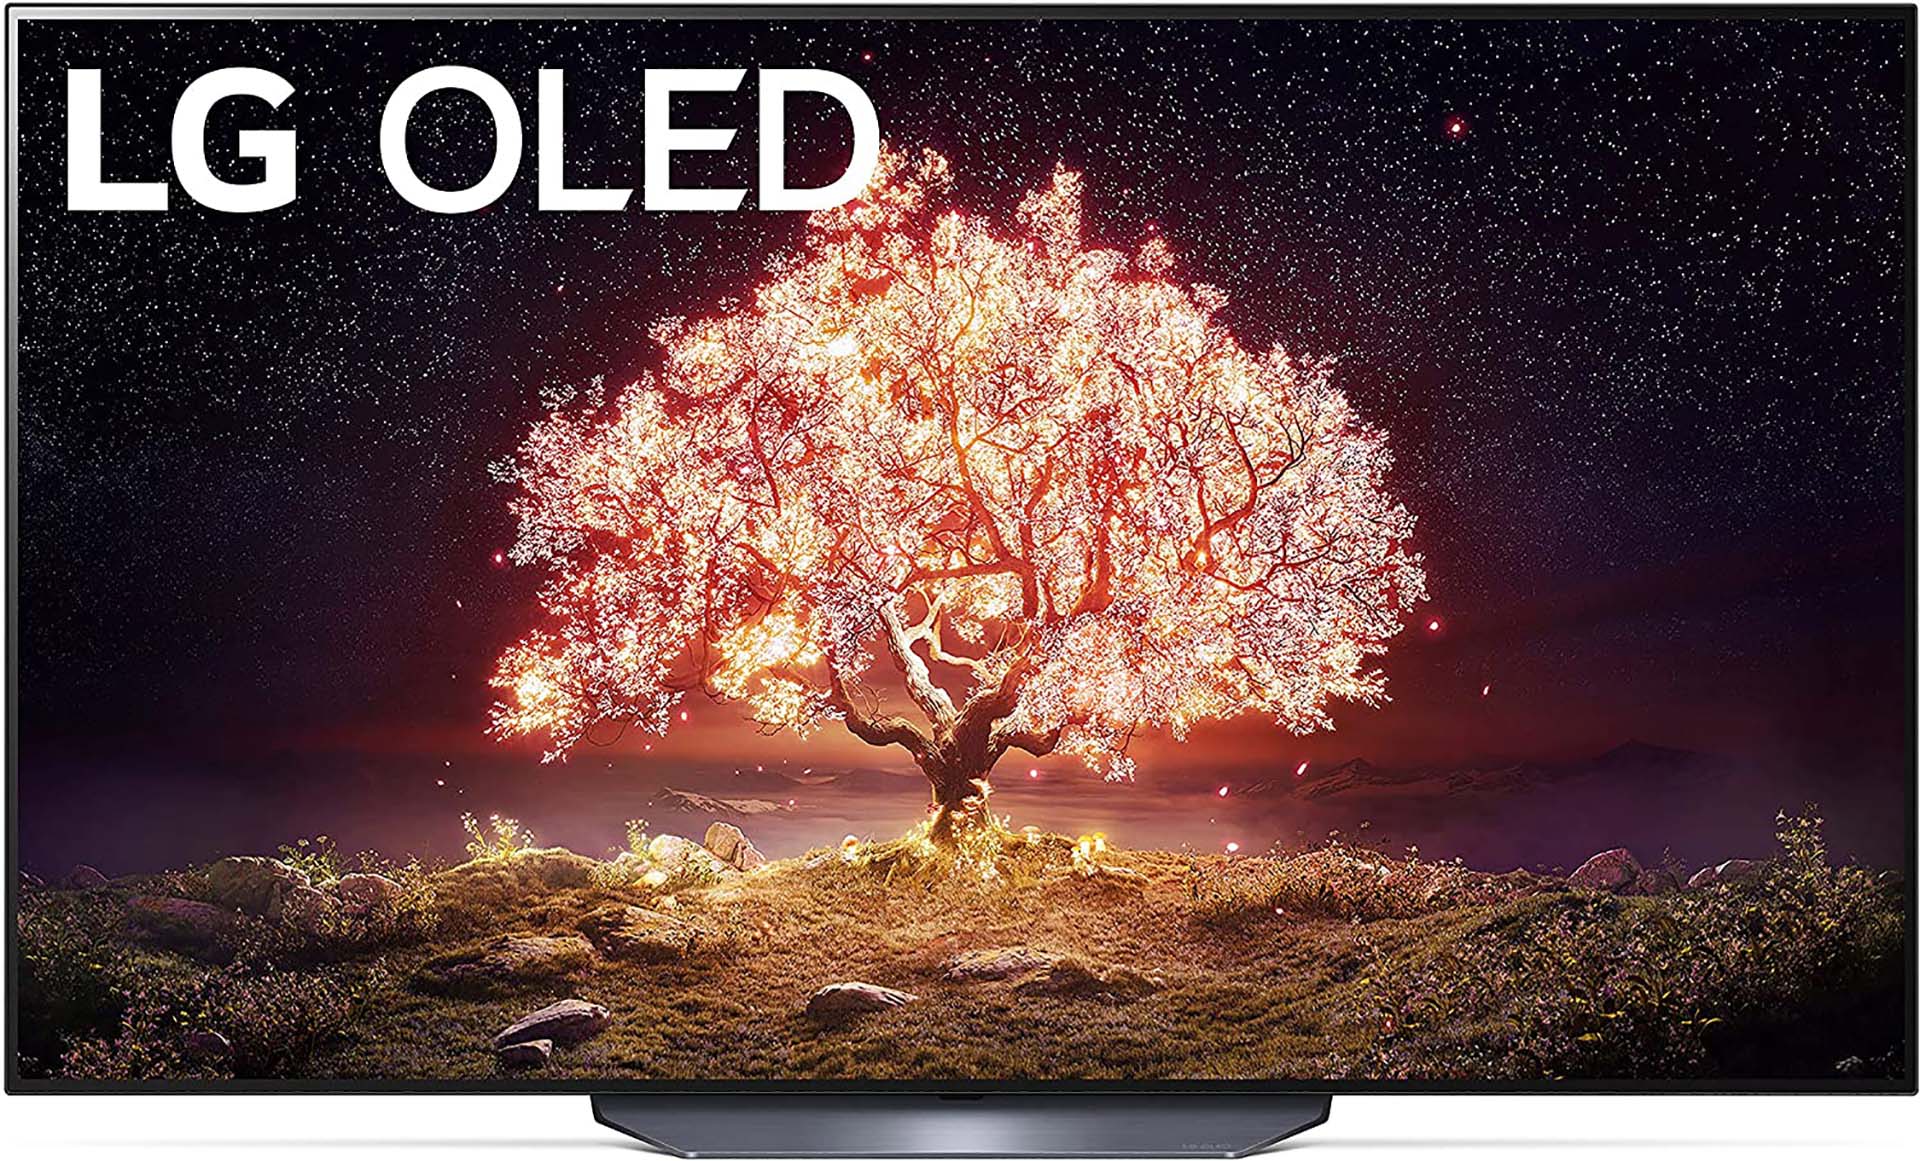 LG 65 OLED B1 Series 4k HDR TV